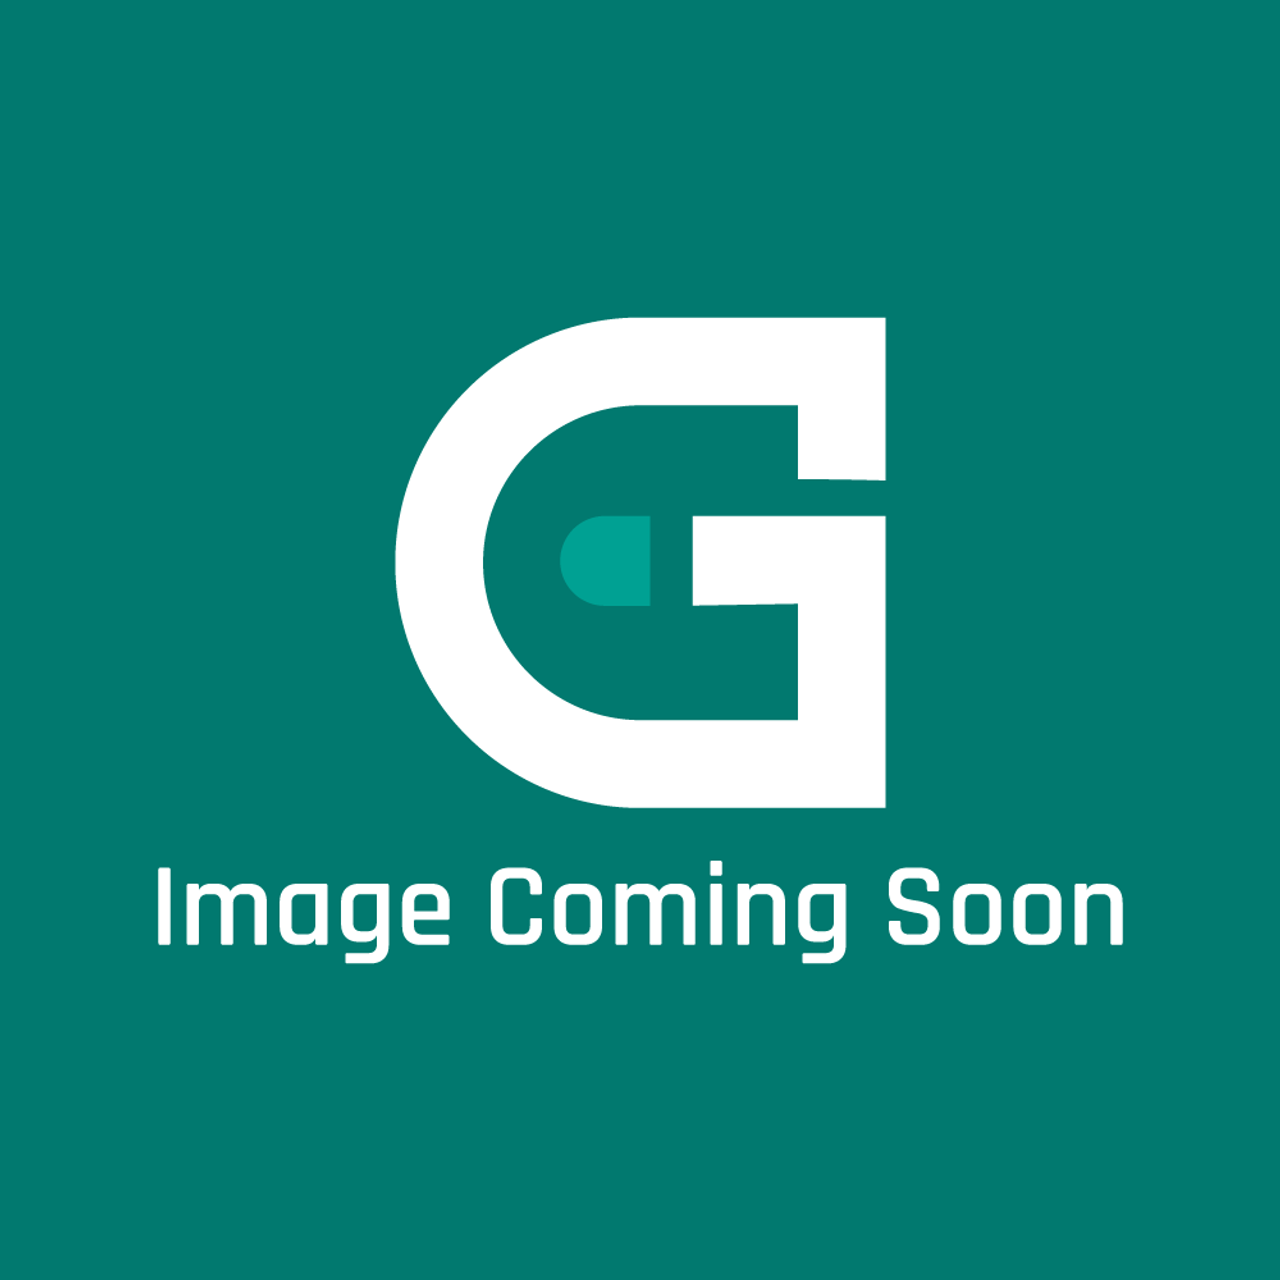 AGA Marvel FS4M997875 - B00003Abv - L/Wen Front G.Blk - Image Coming Soon!